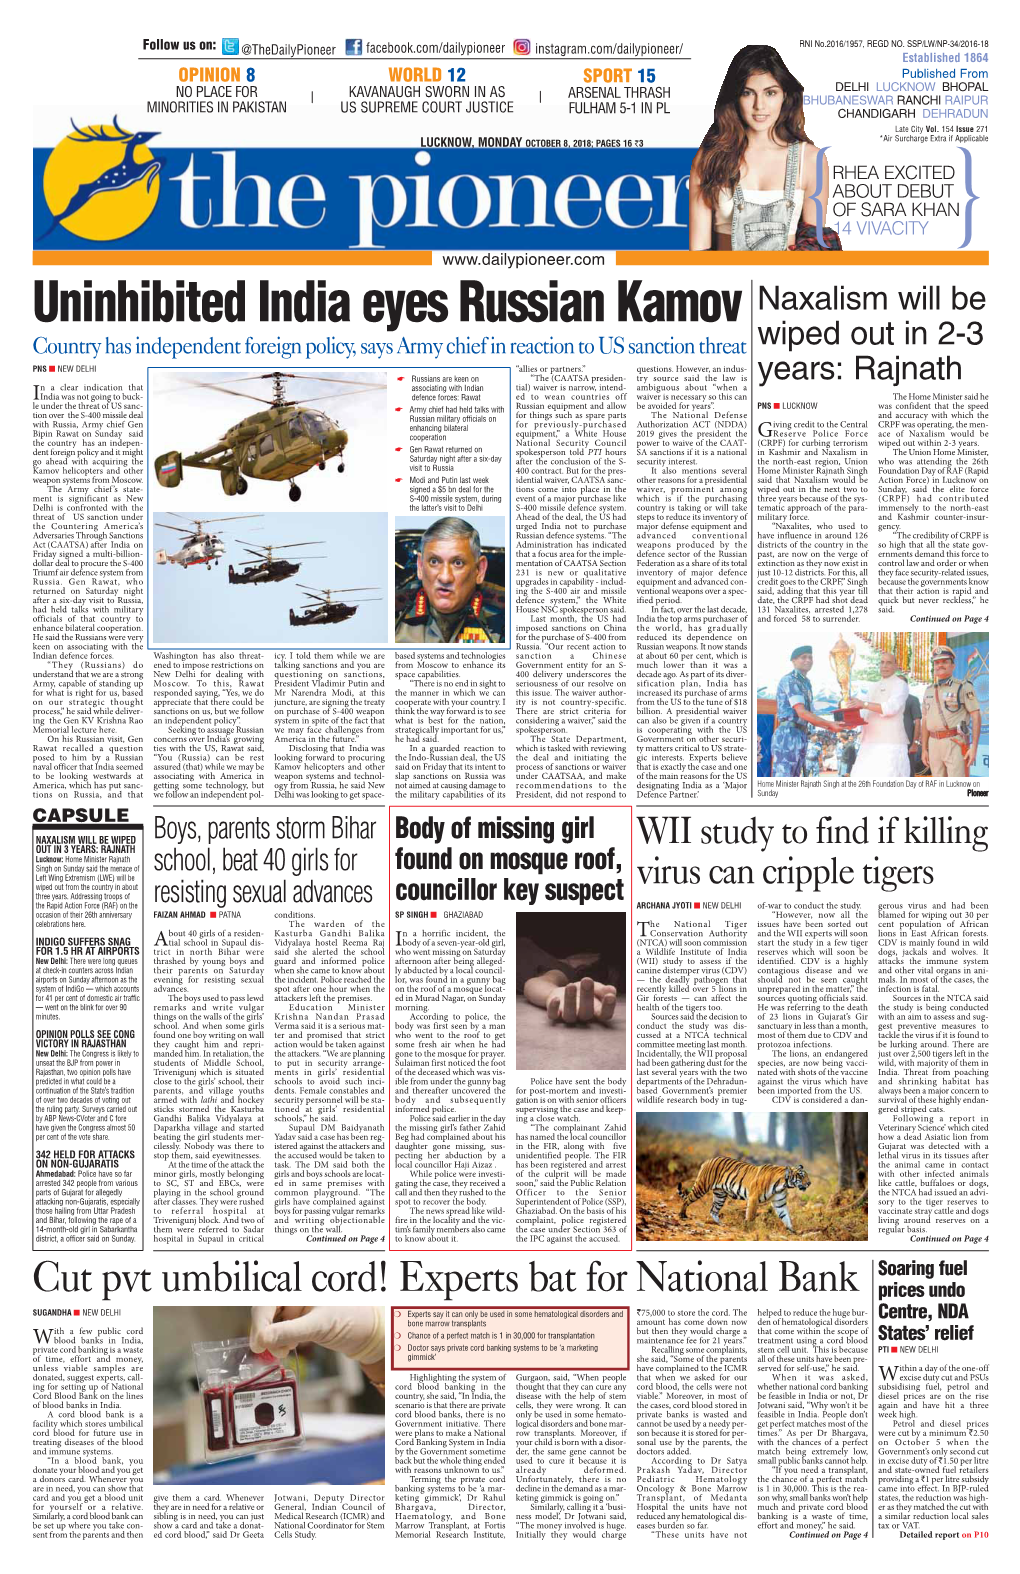 Uninhibited India Eyes Russian Kamov